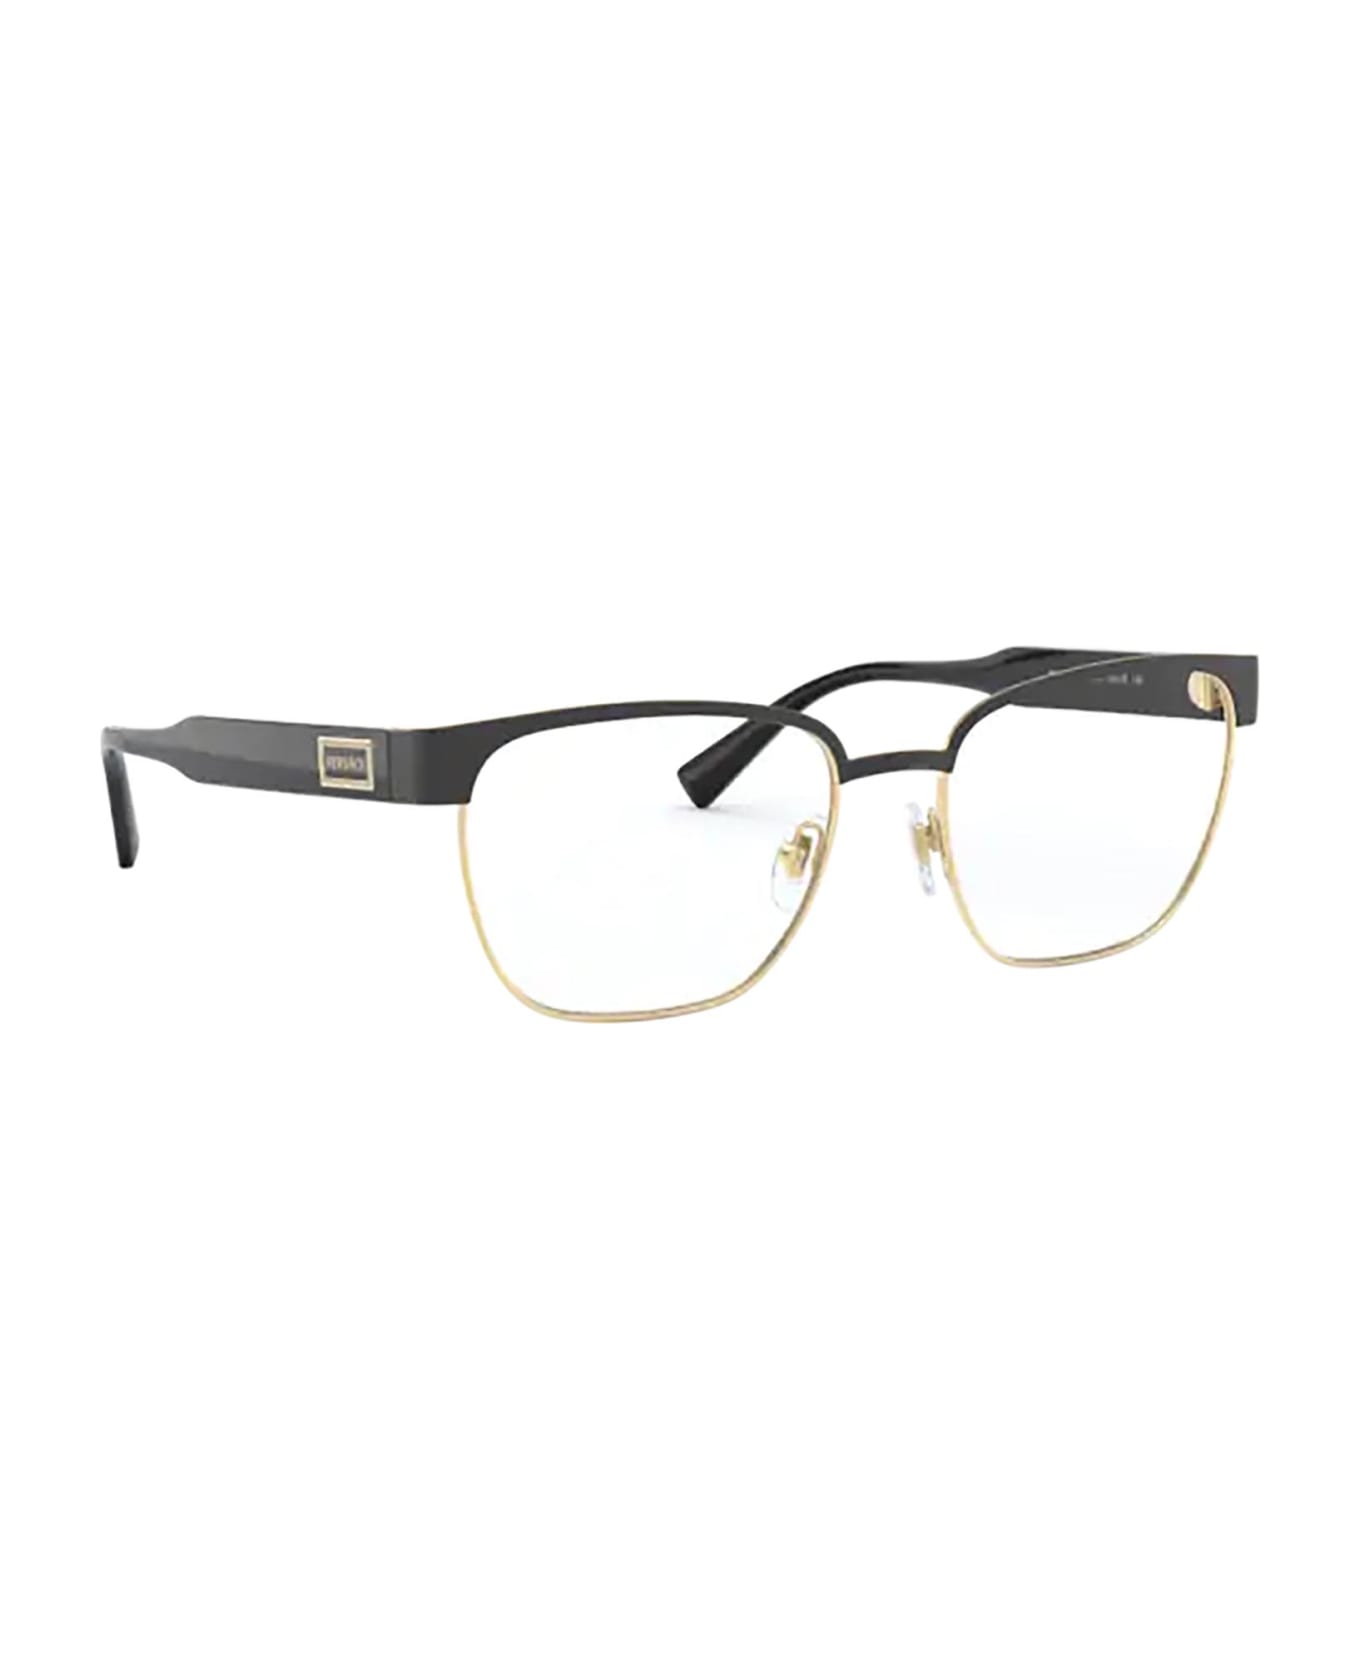 Versace Eyewear Ve1264 Matte Black / Gold Glasses - Matte Black / Gold アイウェア